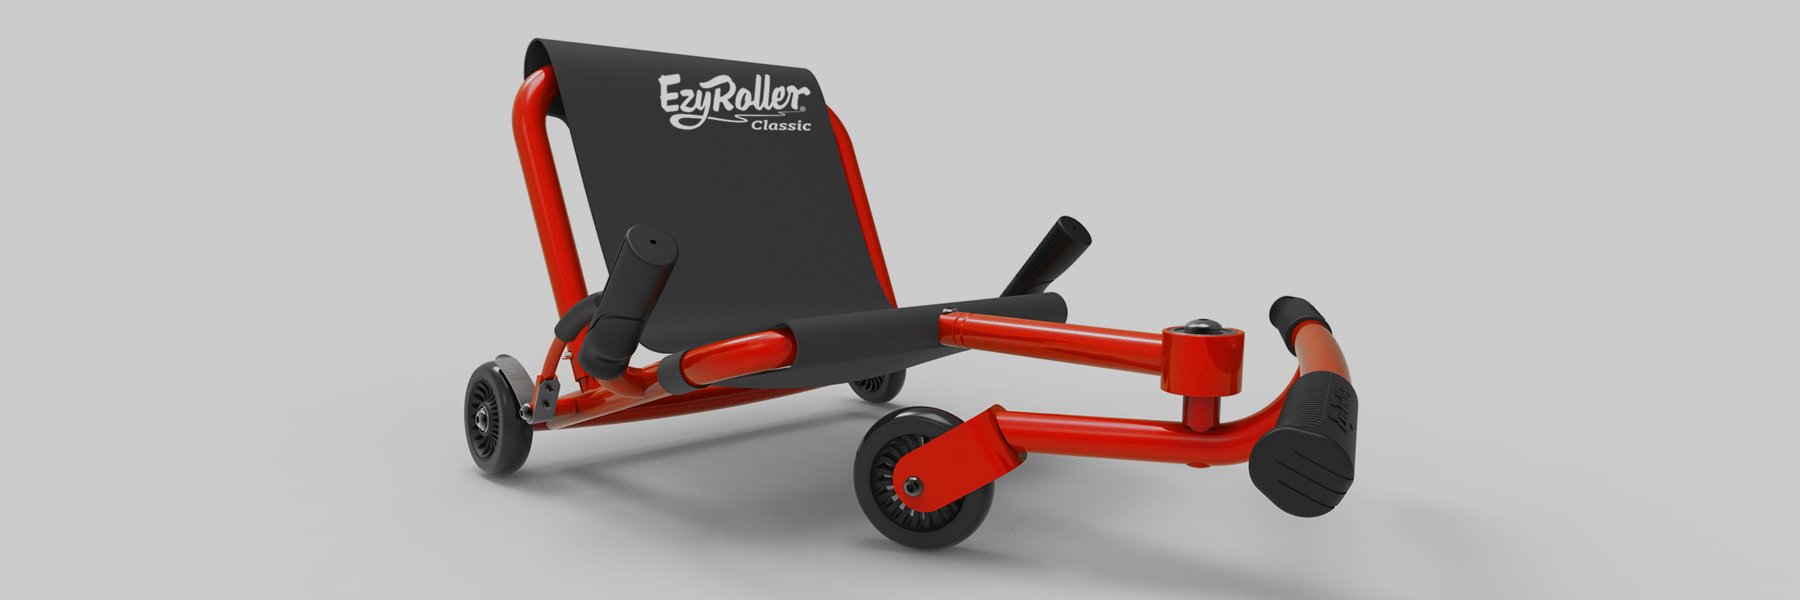 Ezyroller Classic Orange Ultimate Riding Machine